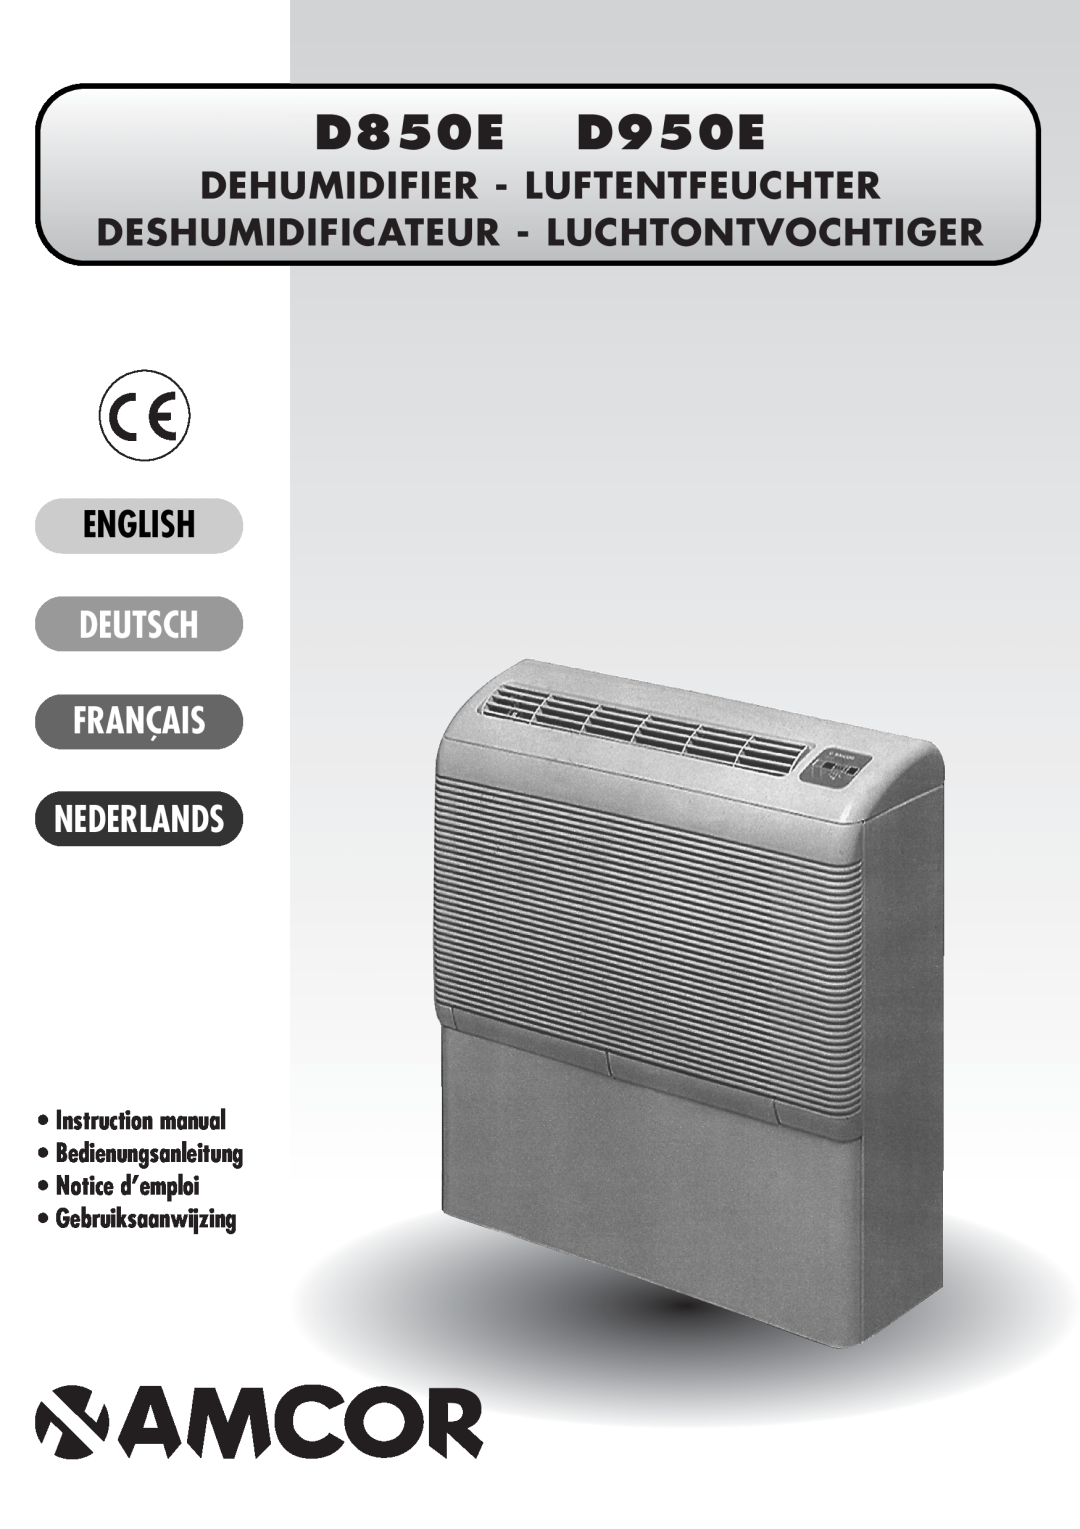 Amcor instruction manual Dehumidifier - Luftentfeuchter, Deshumidificateur - Luchtontvochtiger English, D850E D950E 